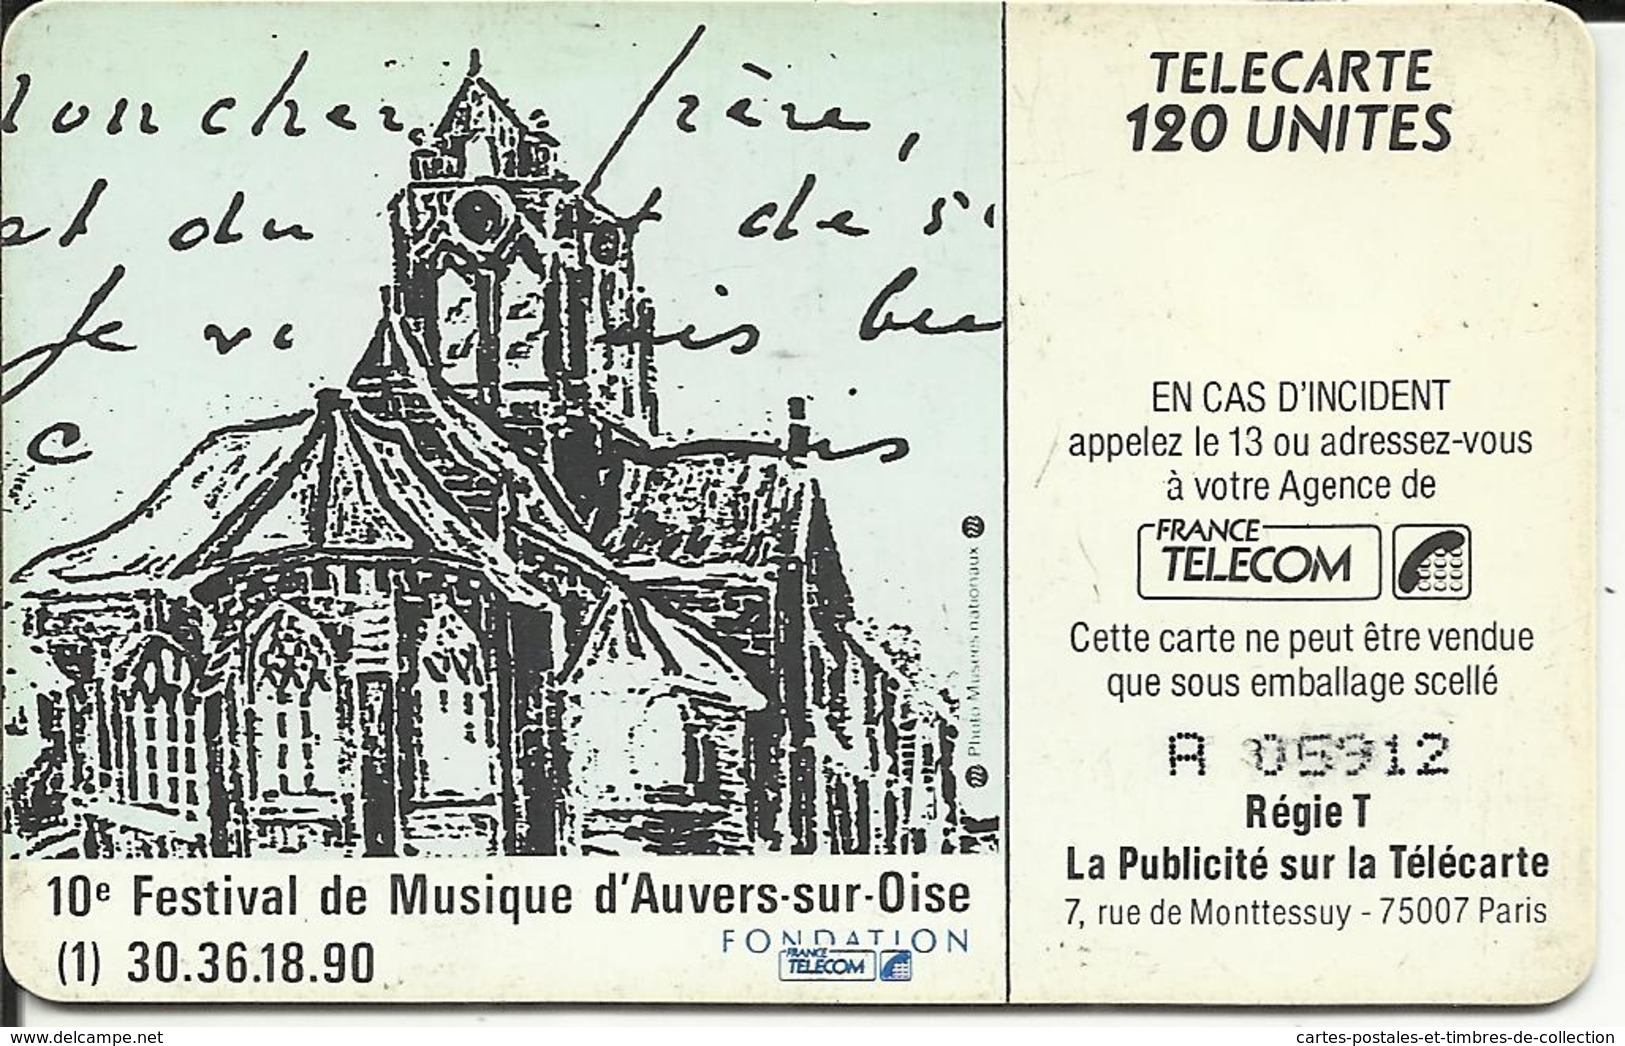 Télécarte 120 U , Du 04/90 , " Vincent VAN GOGH 1853-1890 " Puce: SO3 , N° F 0114 A , N° Controle A 05912 - 1990